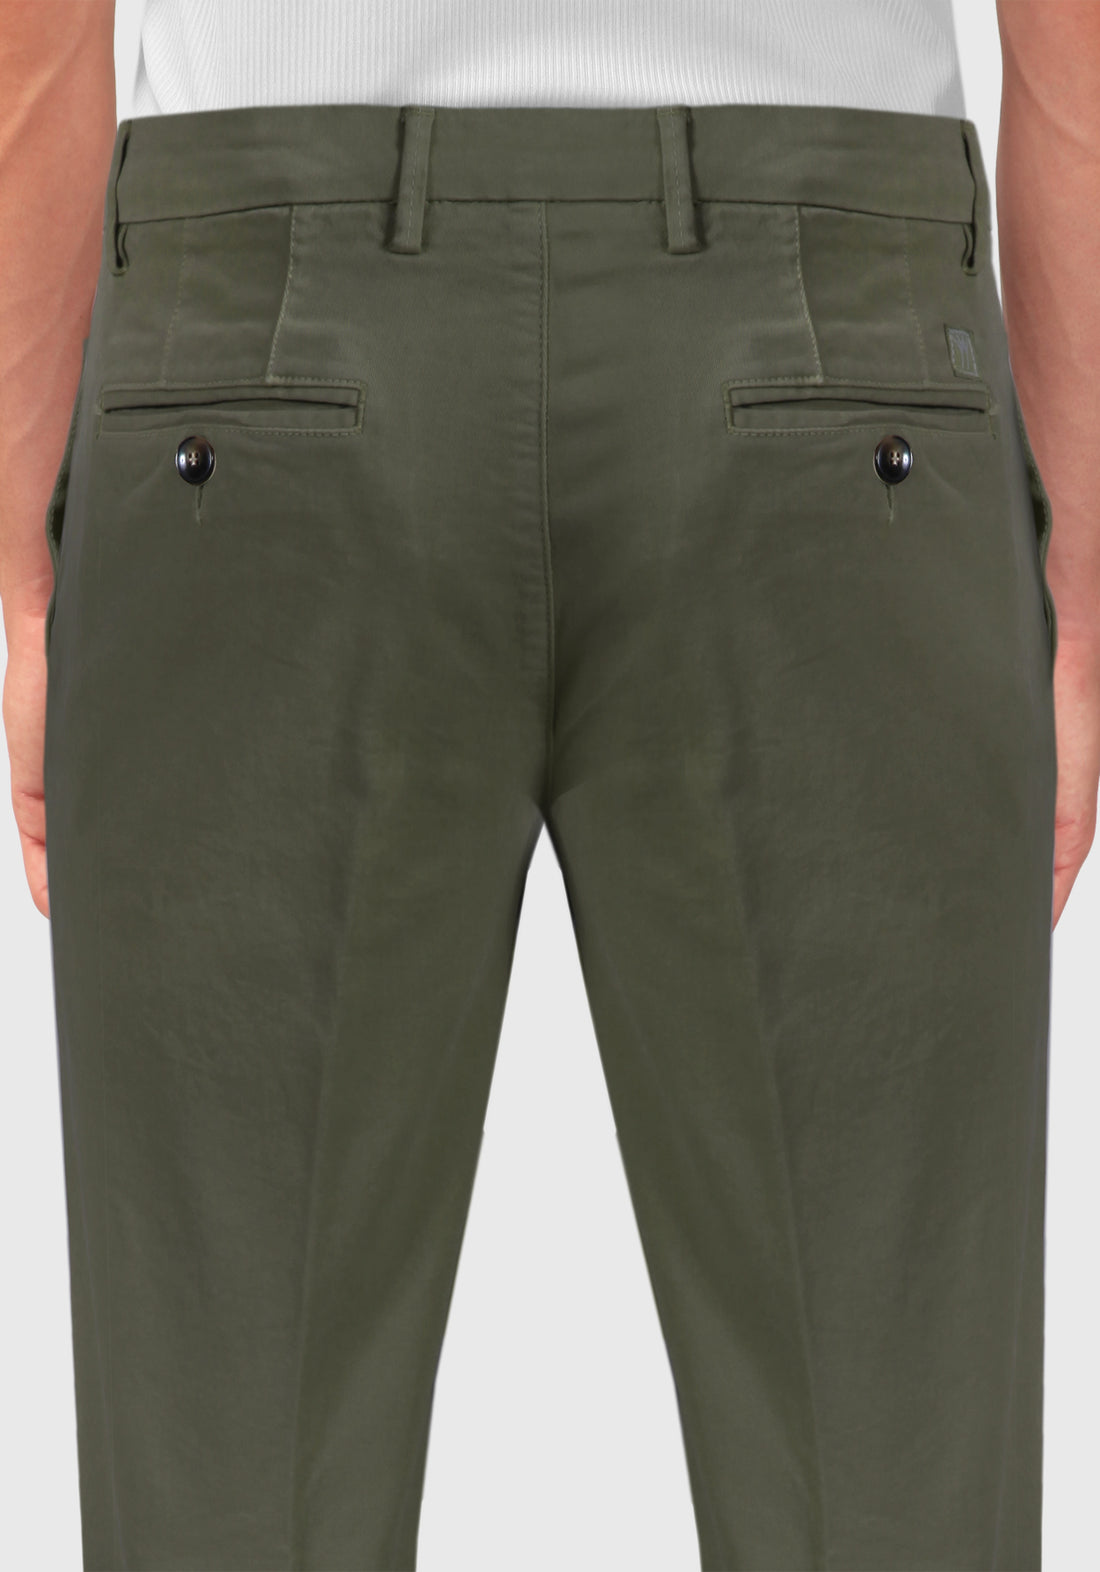 Pantalone Chinos Tasca America Cotone caldo - Militare